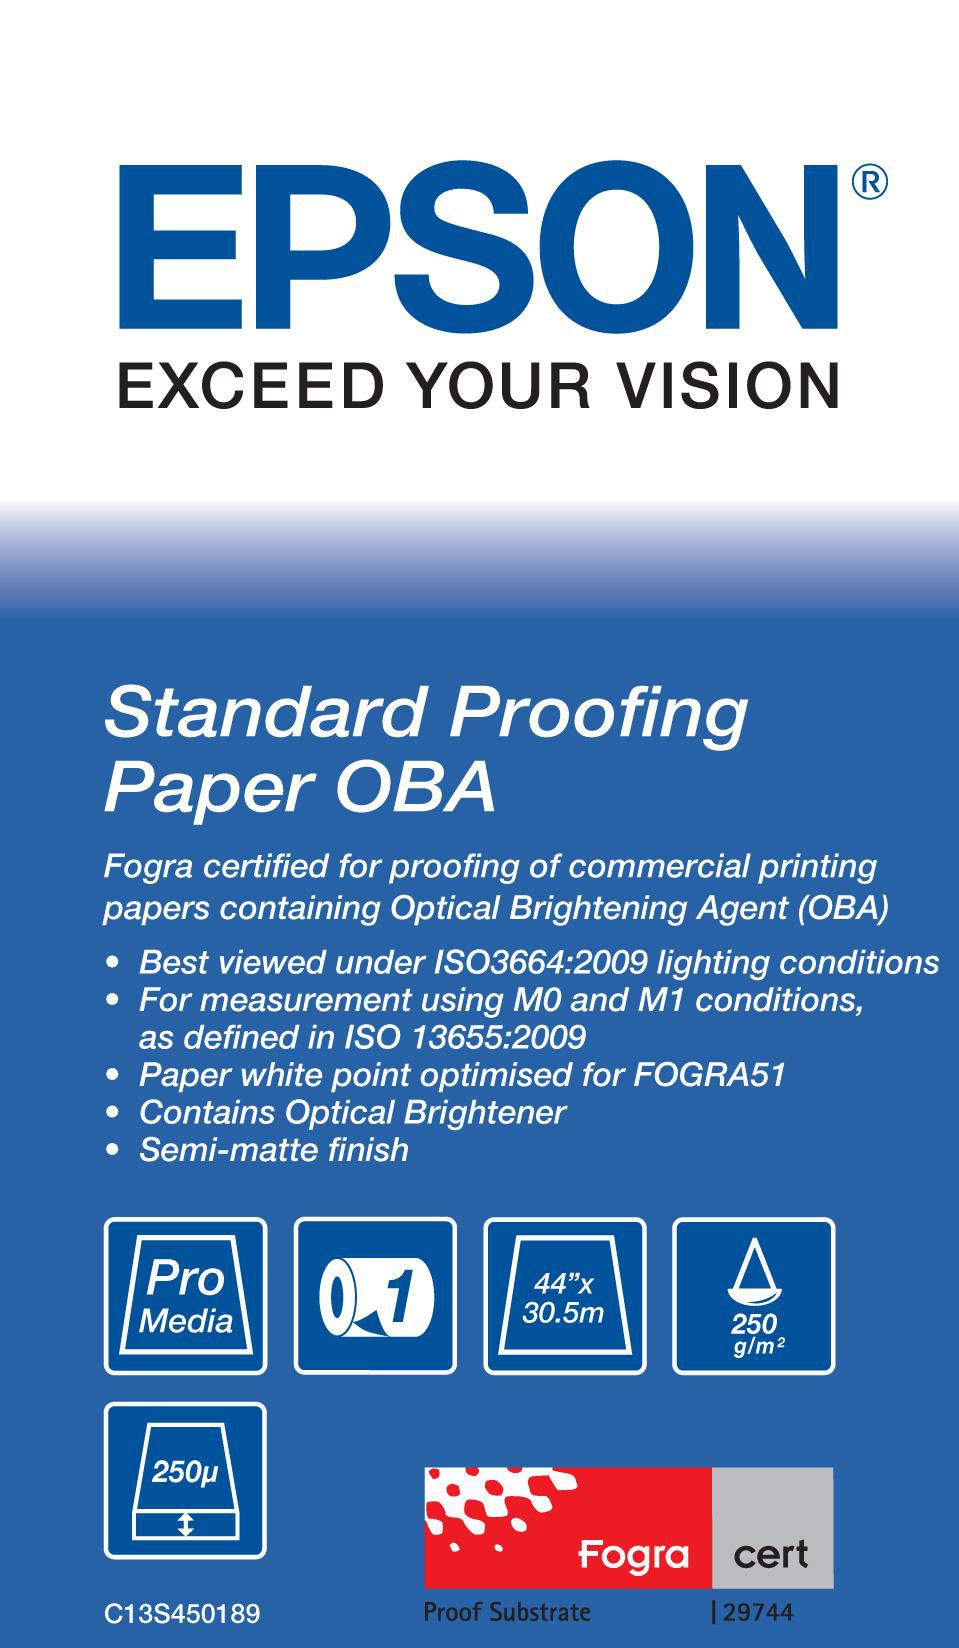 Std Proofing Paper OBA 44\"x30.5m 250gm2